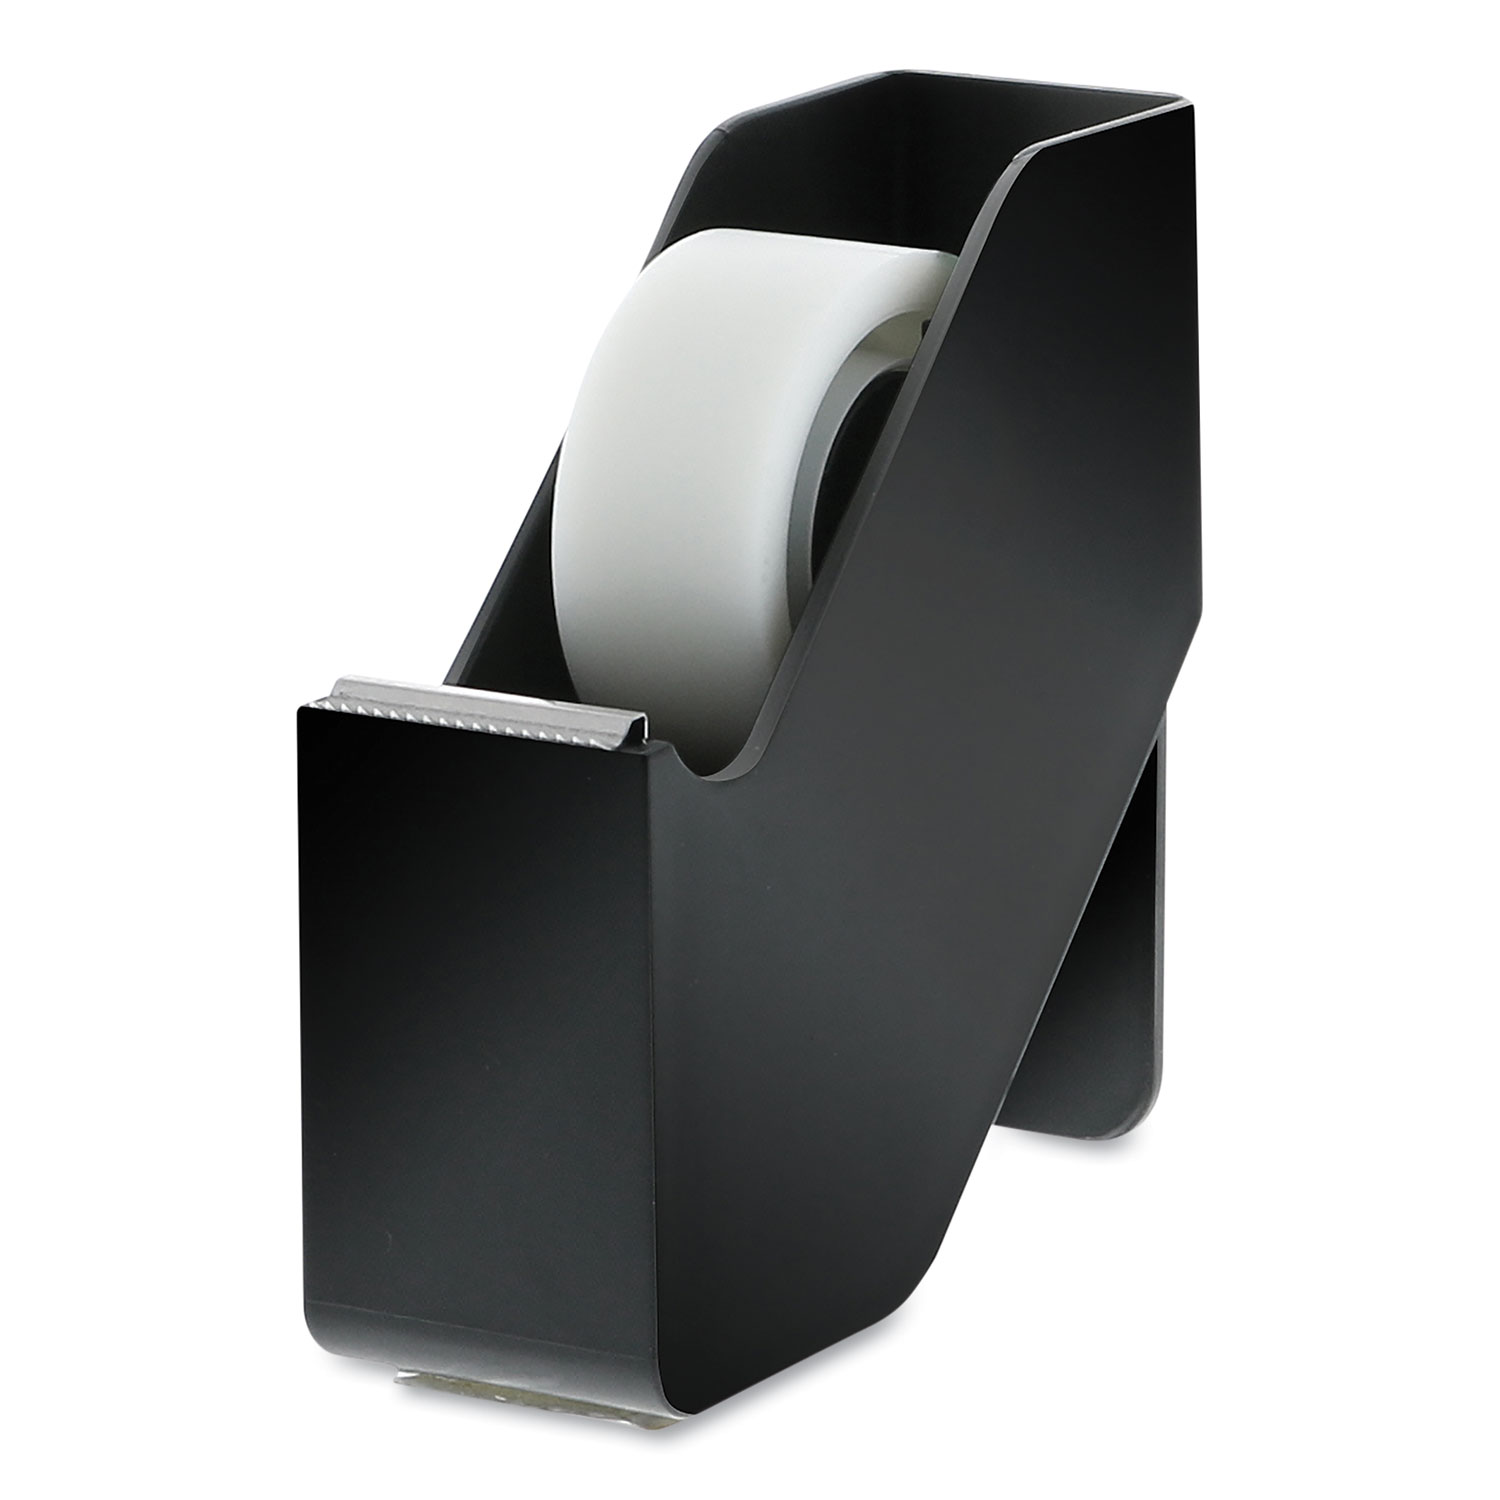  Bostitch KT-TAPE-BLK Konnect Slim-Design Tabletop Tape Dispenser, Plus One Roll of 0.75 x 1000 Tape, 1 Core, Plastic, Black (BOS24340004) 